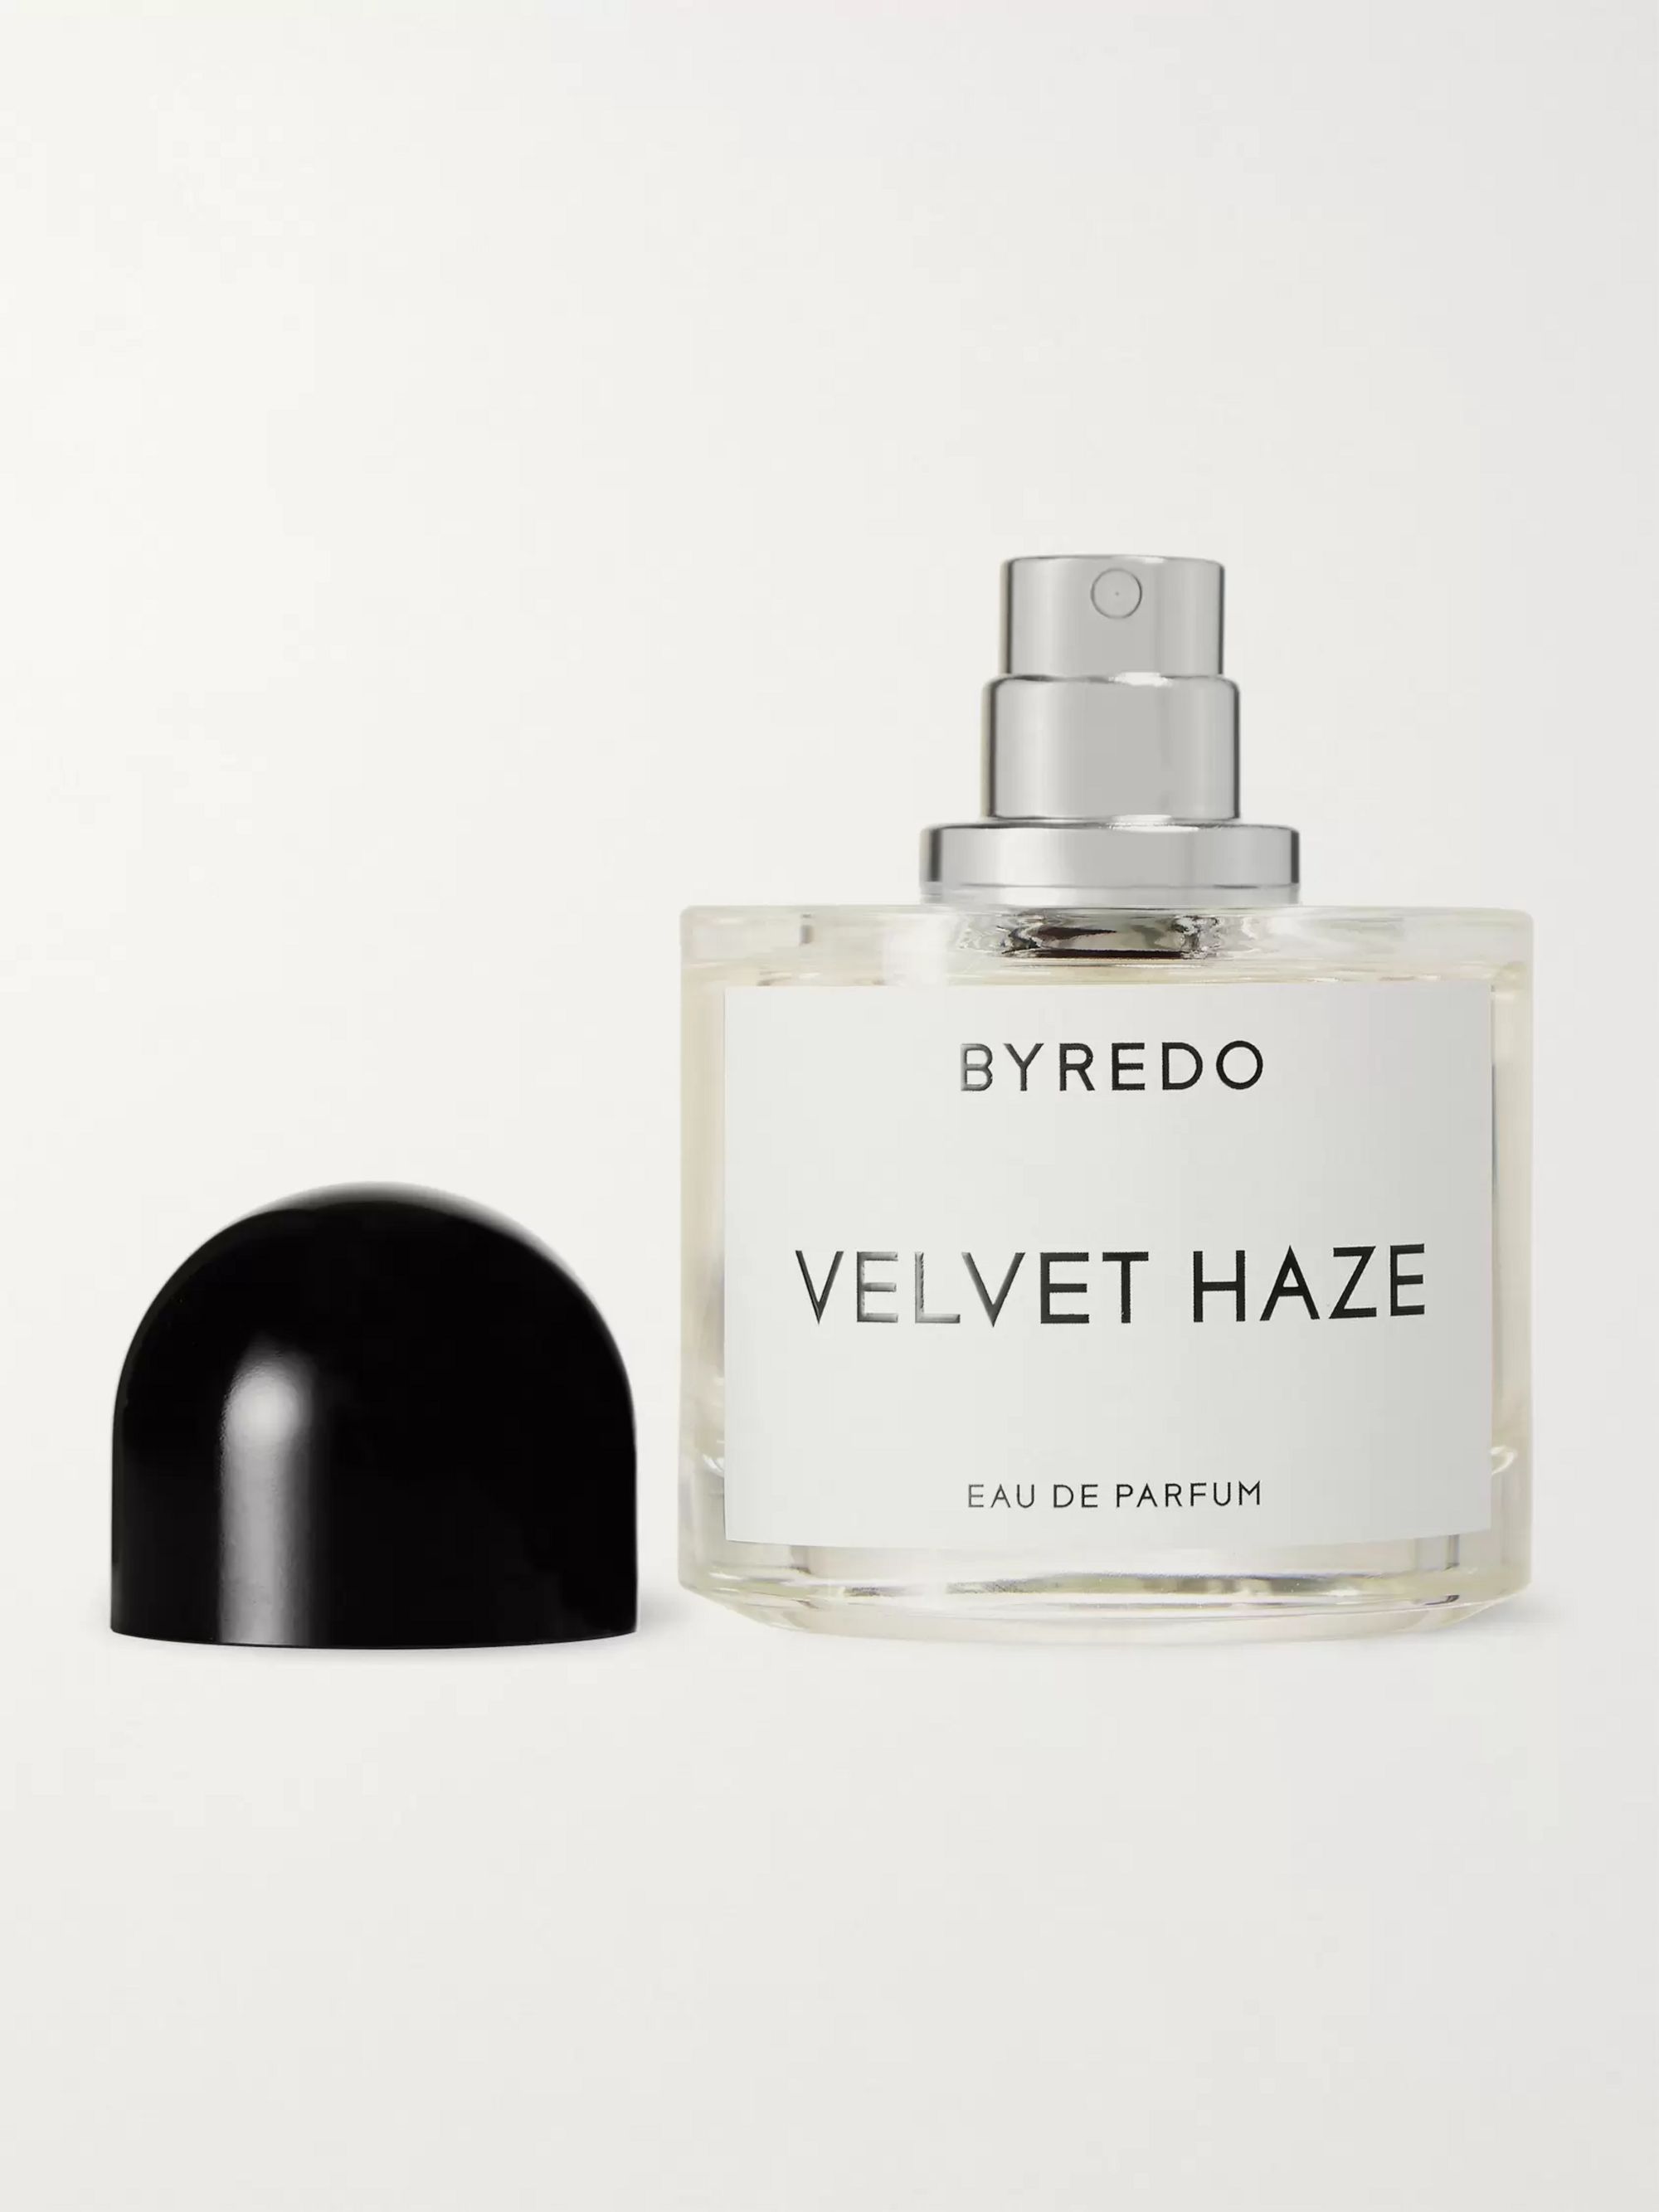 Byredo Parfums Velvet Haze. Парфюм Byredo Velvet Haze. Байредо вельвет Хейз. Байредо супер кедр. Вода байредо отзывы